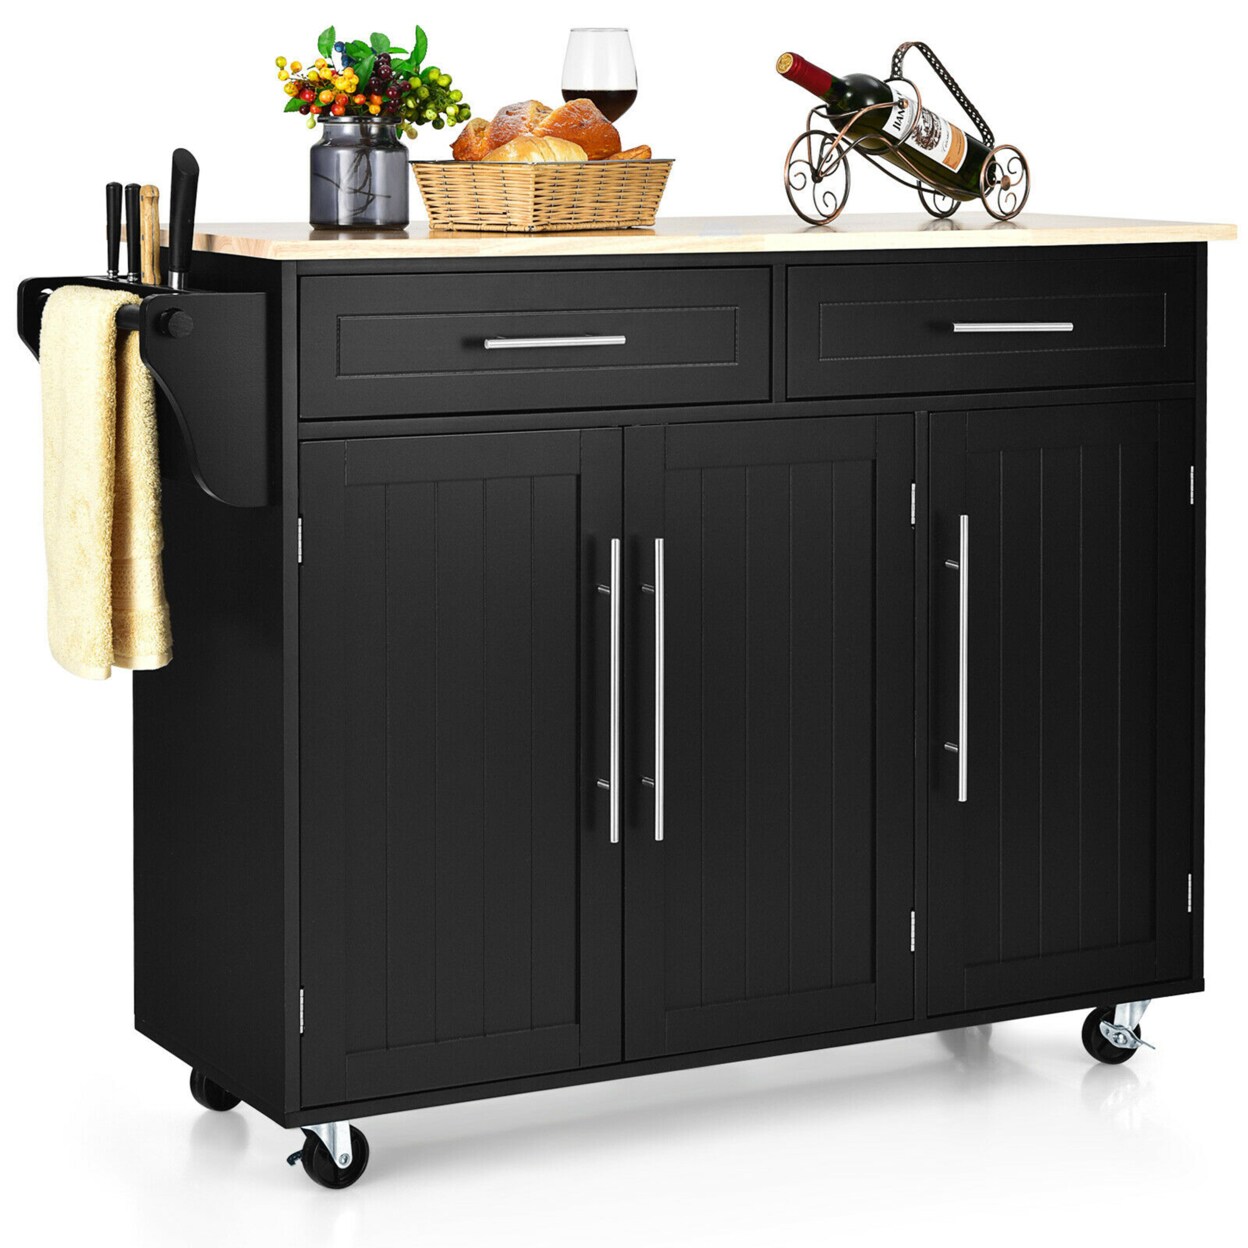 Gymax Kitchen Island Trolley Cart Wood Top Rolling Storage Cabinet w/Knife Block Black